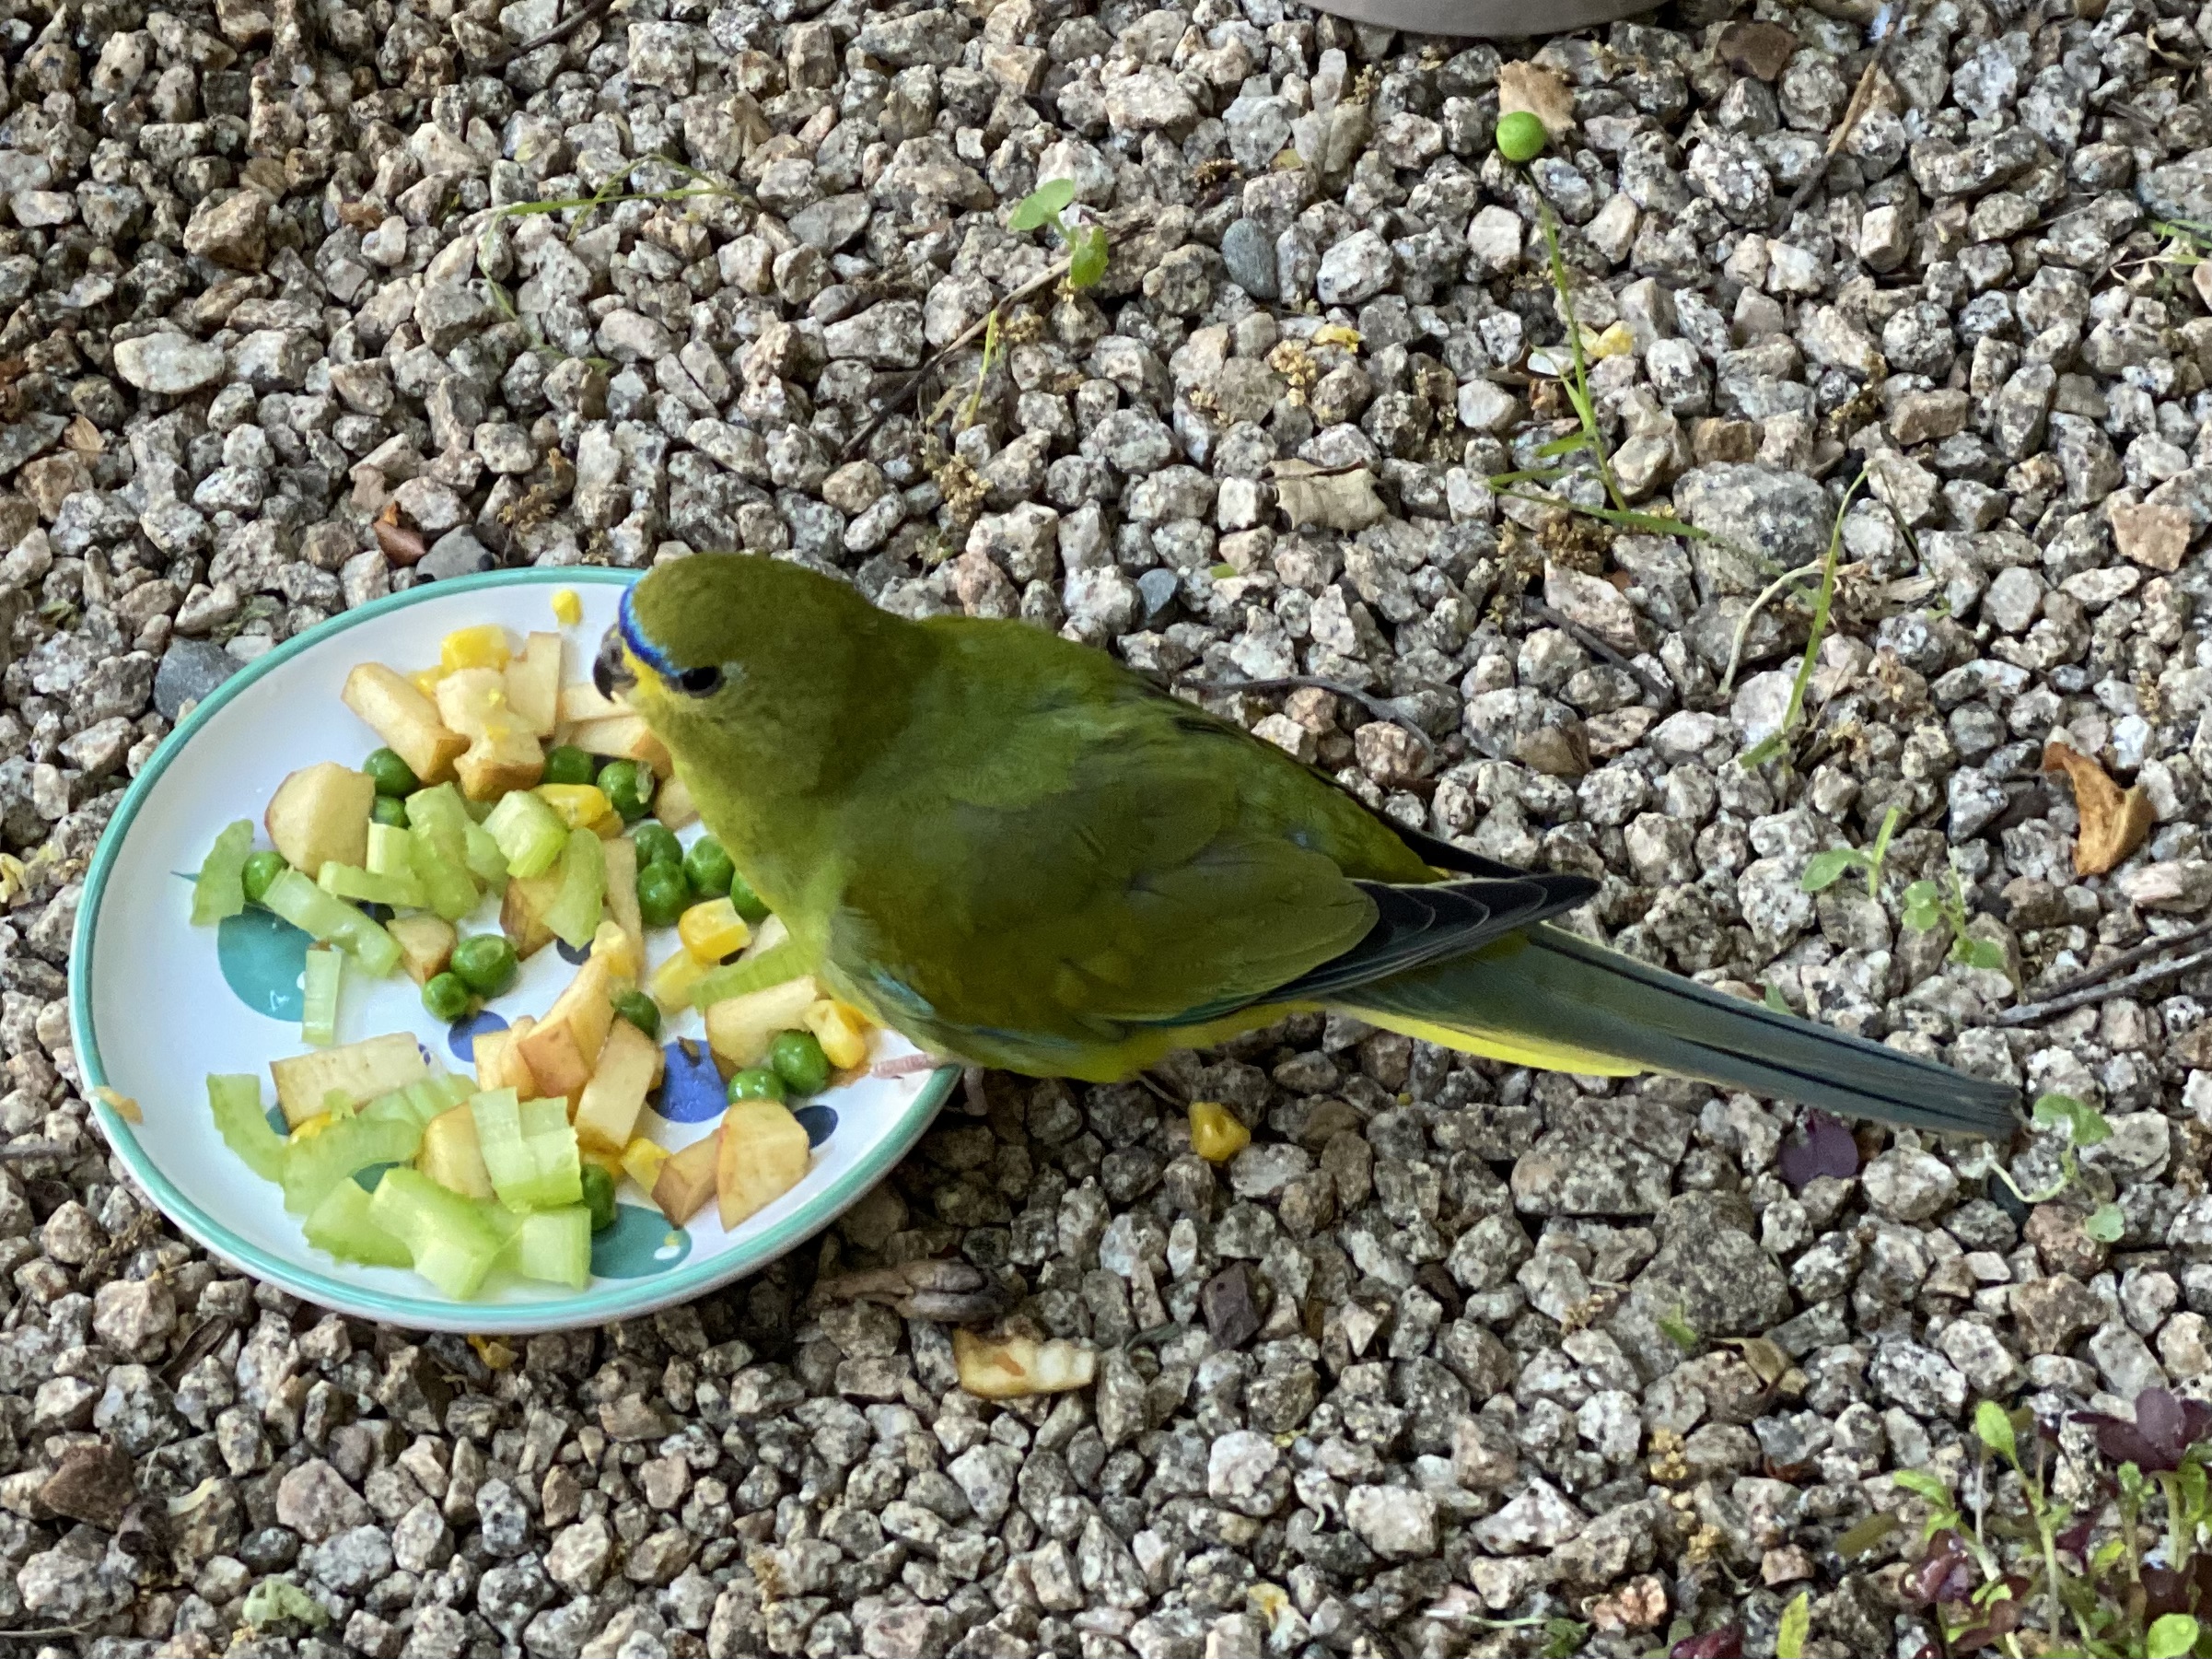 Parrot diets around the world